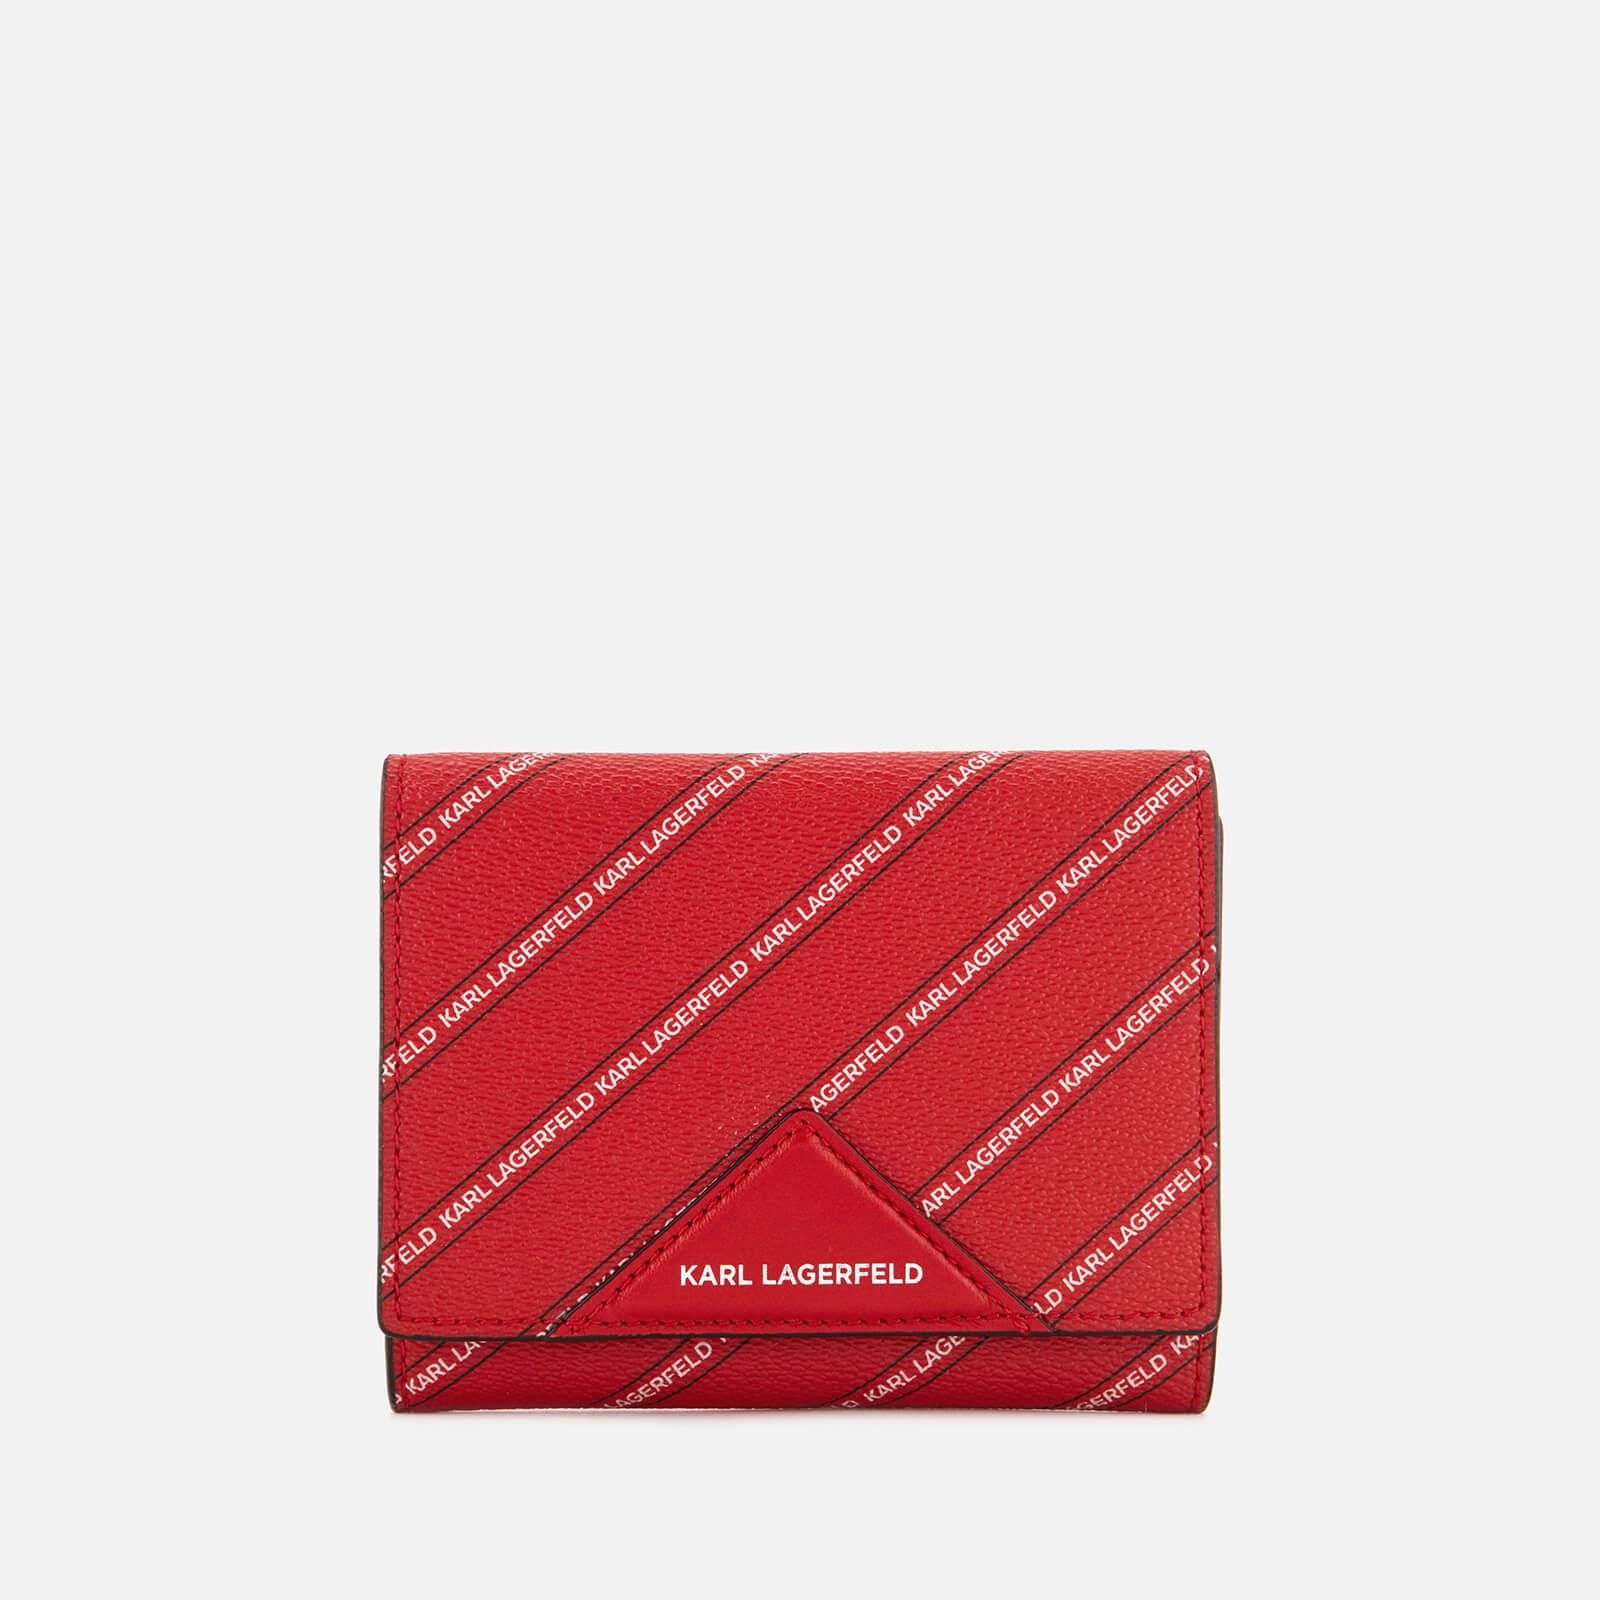 Karl Lagerfeld Wallet in Red - Lyst